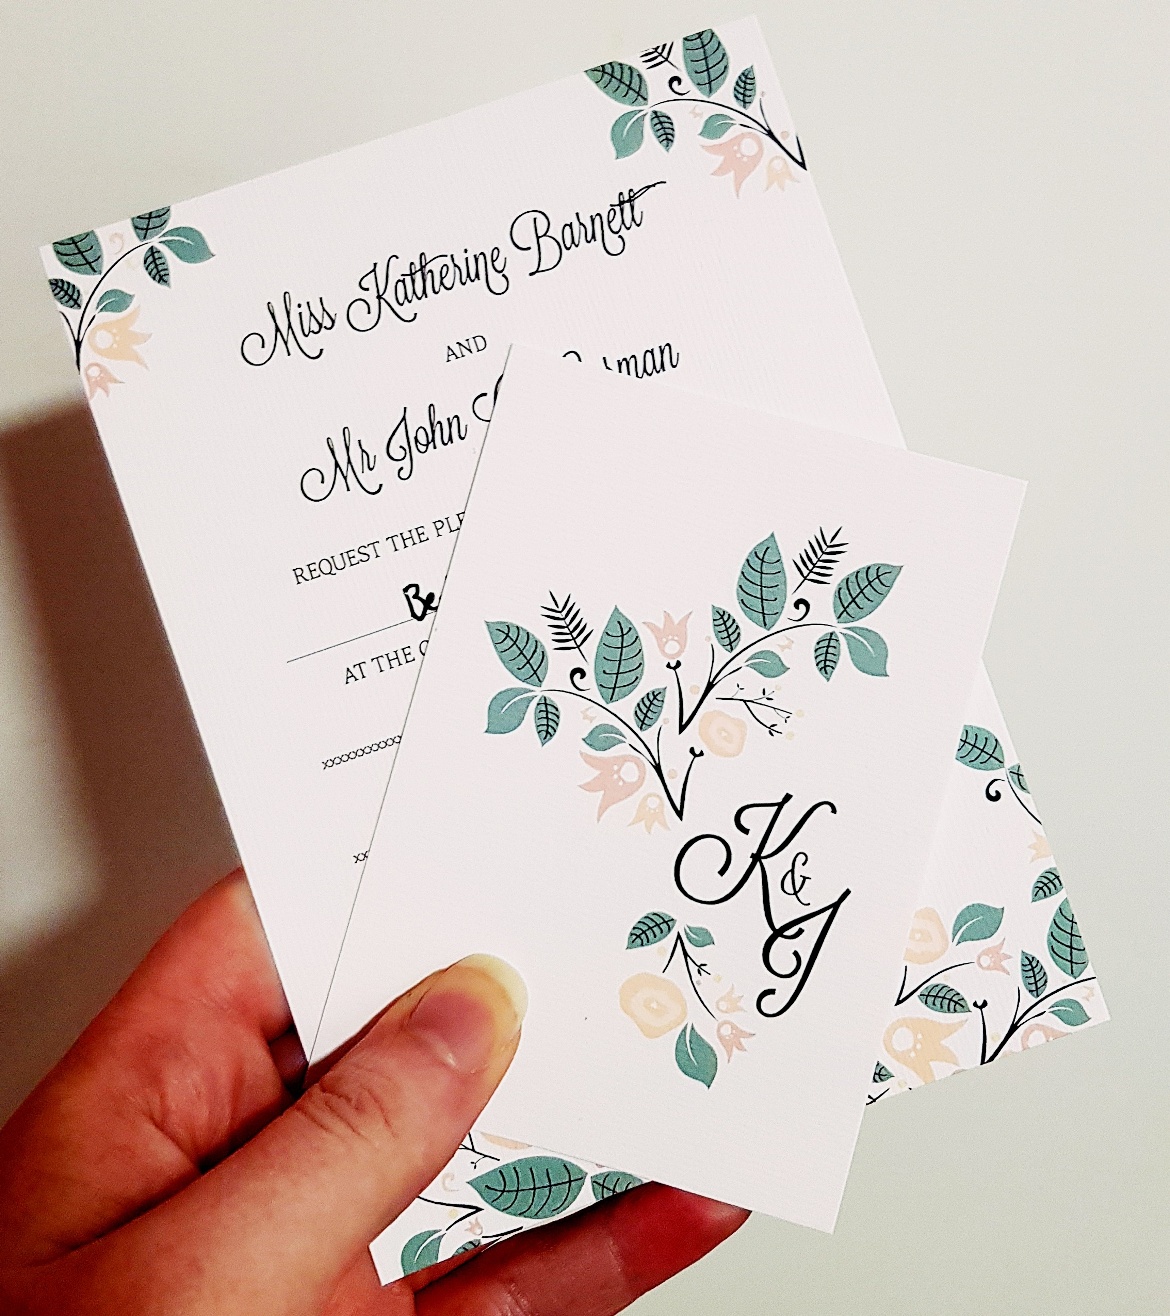 Wedding invite - January 2018 Monthly Recap by BeckyBecky Blogs